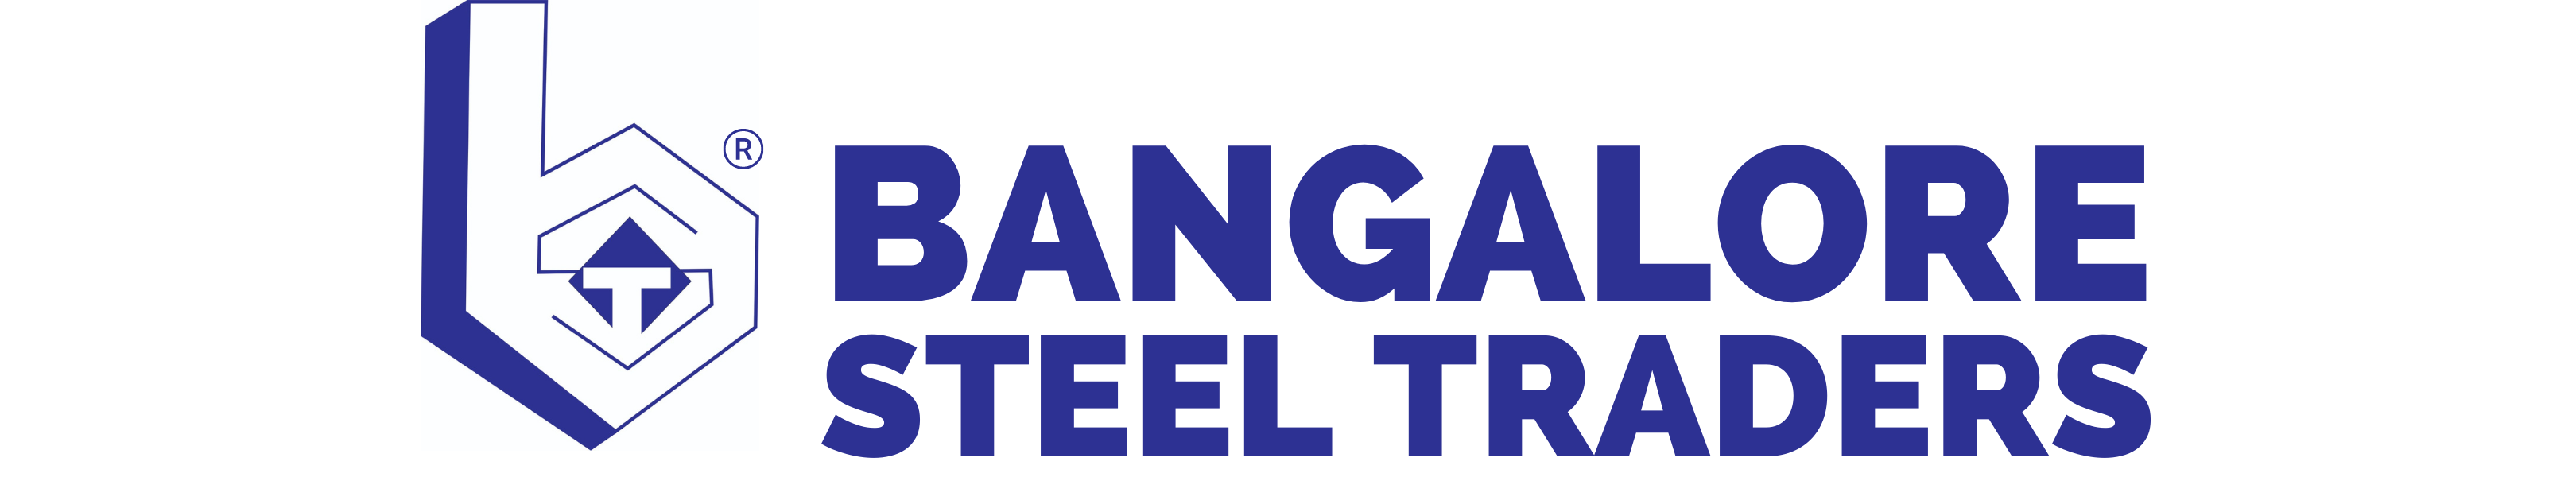 Bangalore Steel Traders